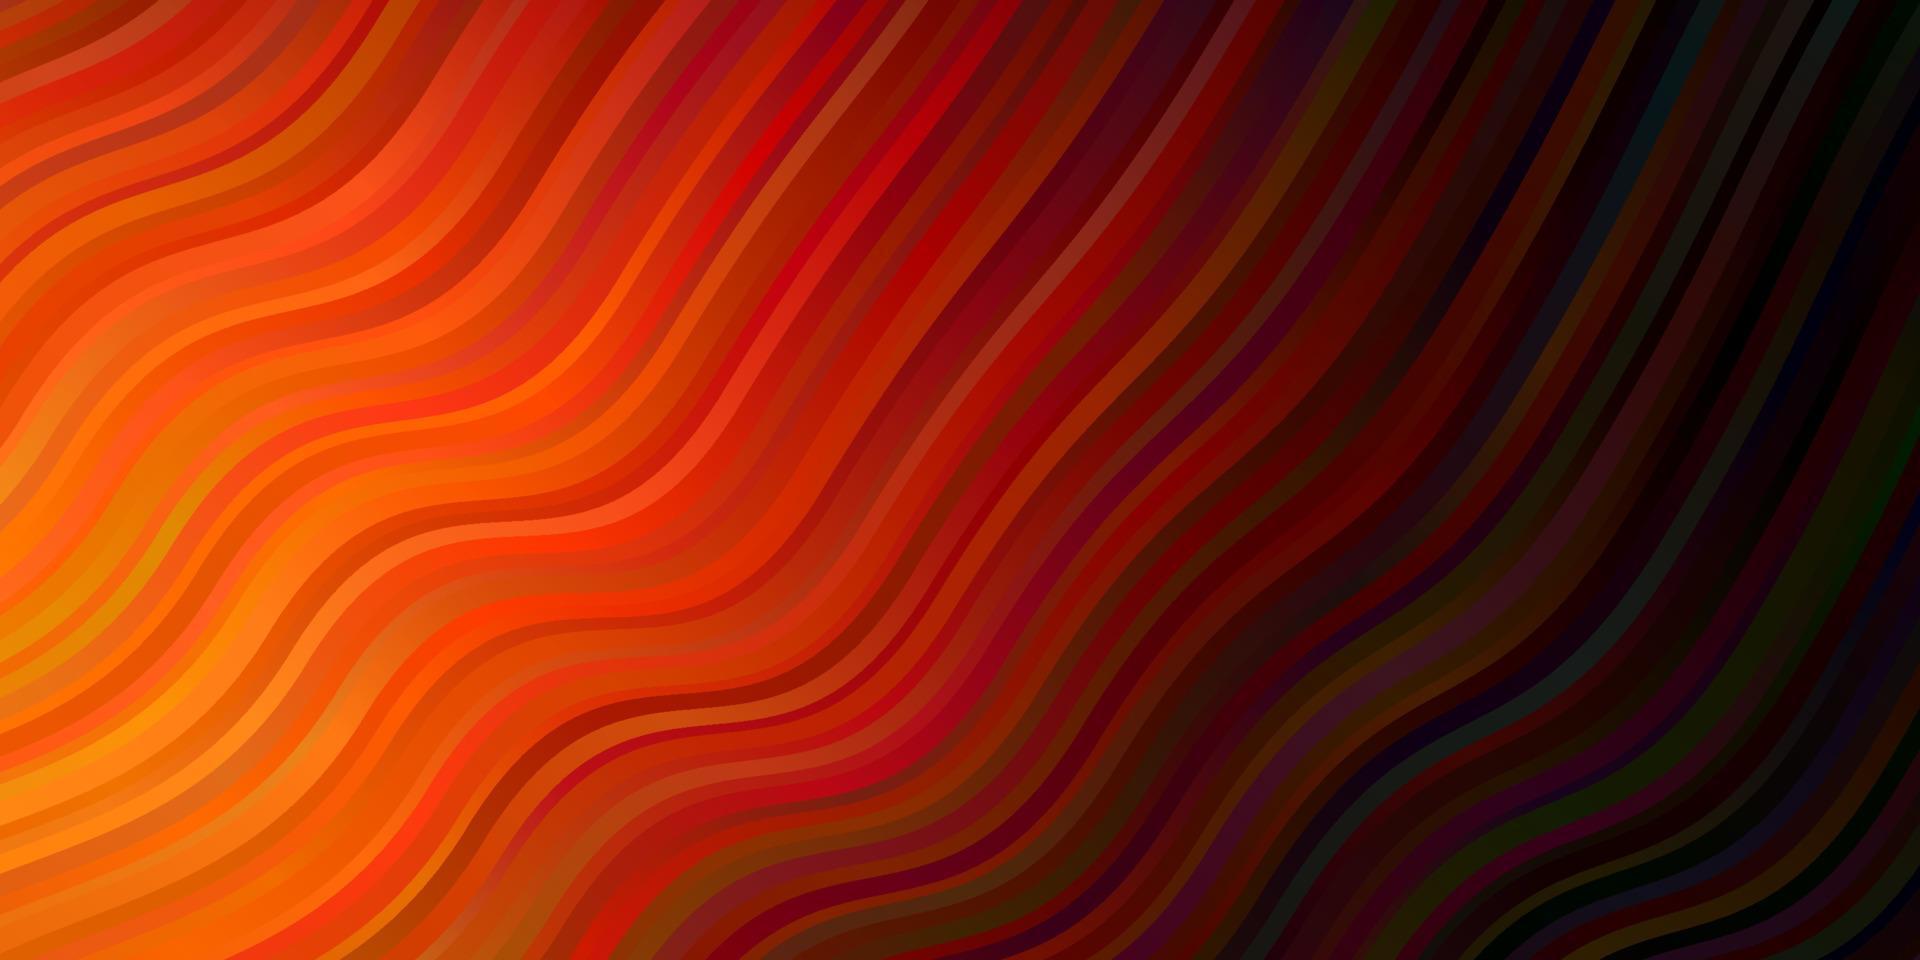 Dark Orange vector pattern with curved lines.